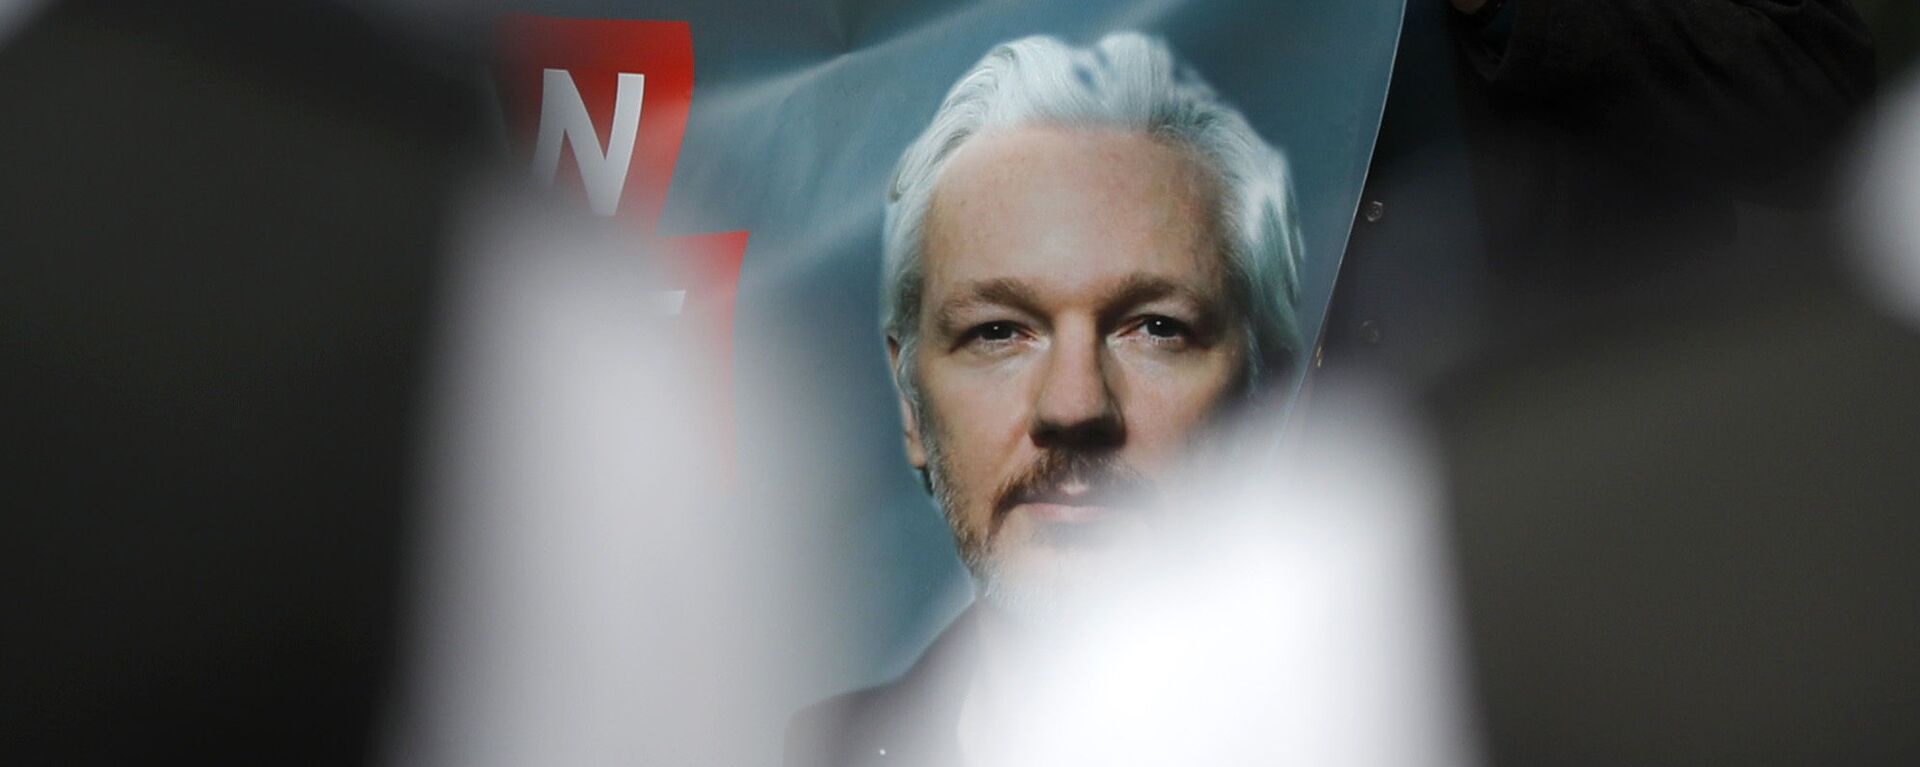 Retrato de Julian Assange, fundador de Wikileaks - Sputnik Mundo, 1920, 17.05.2022